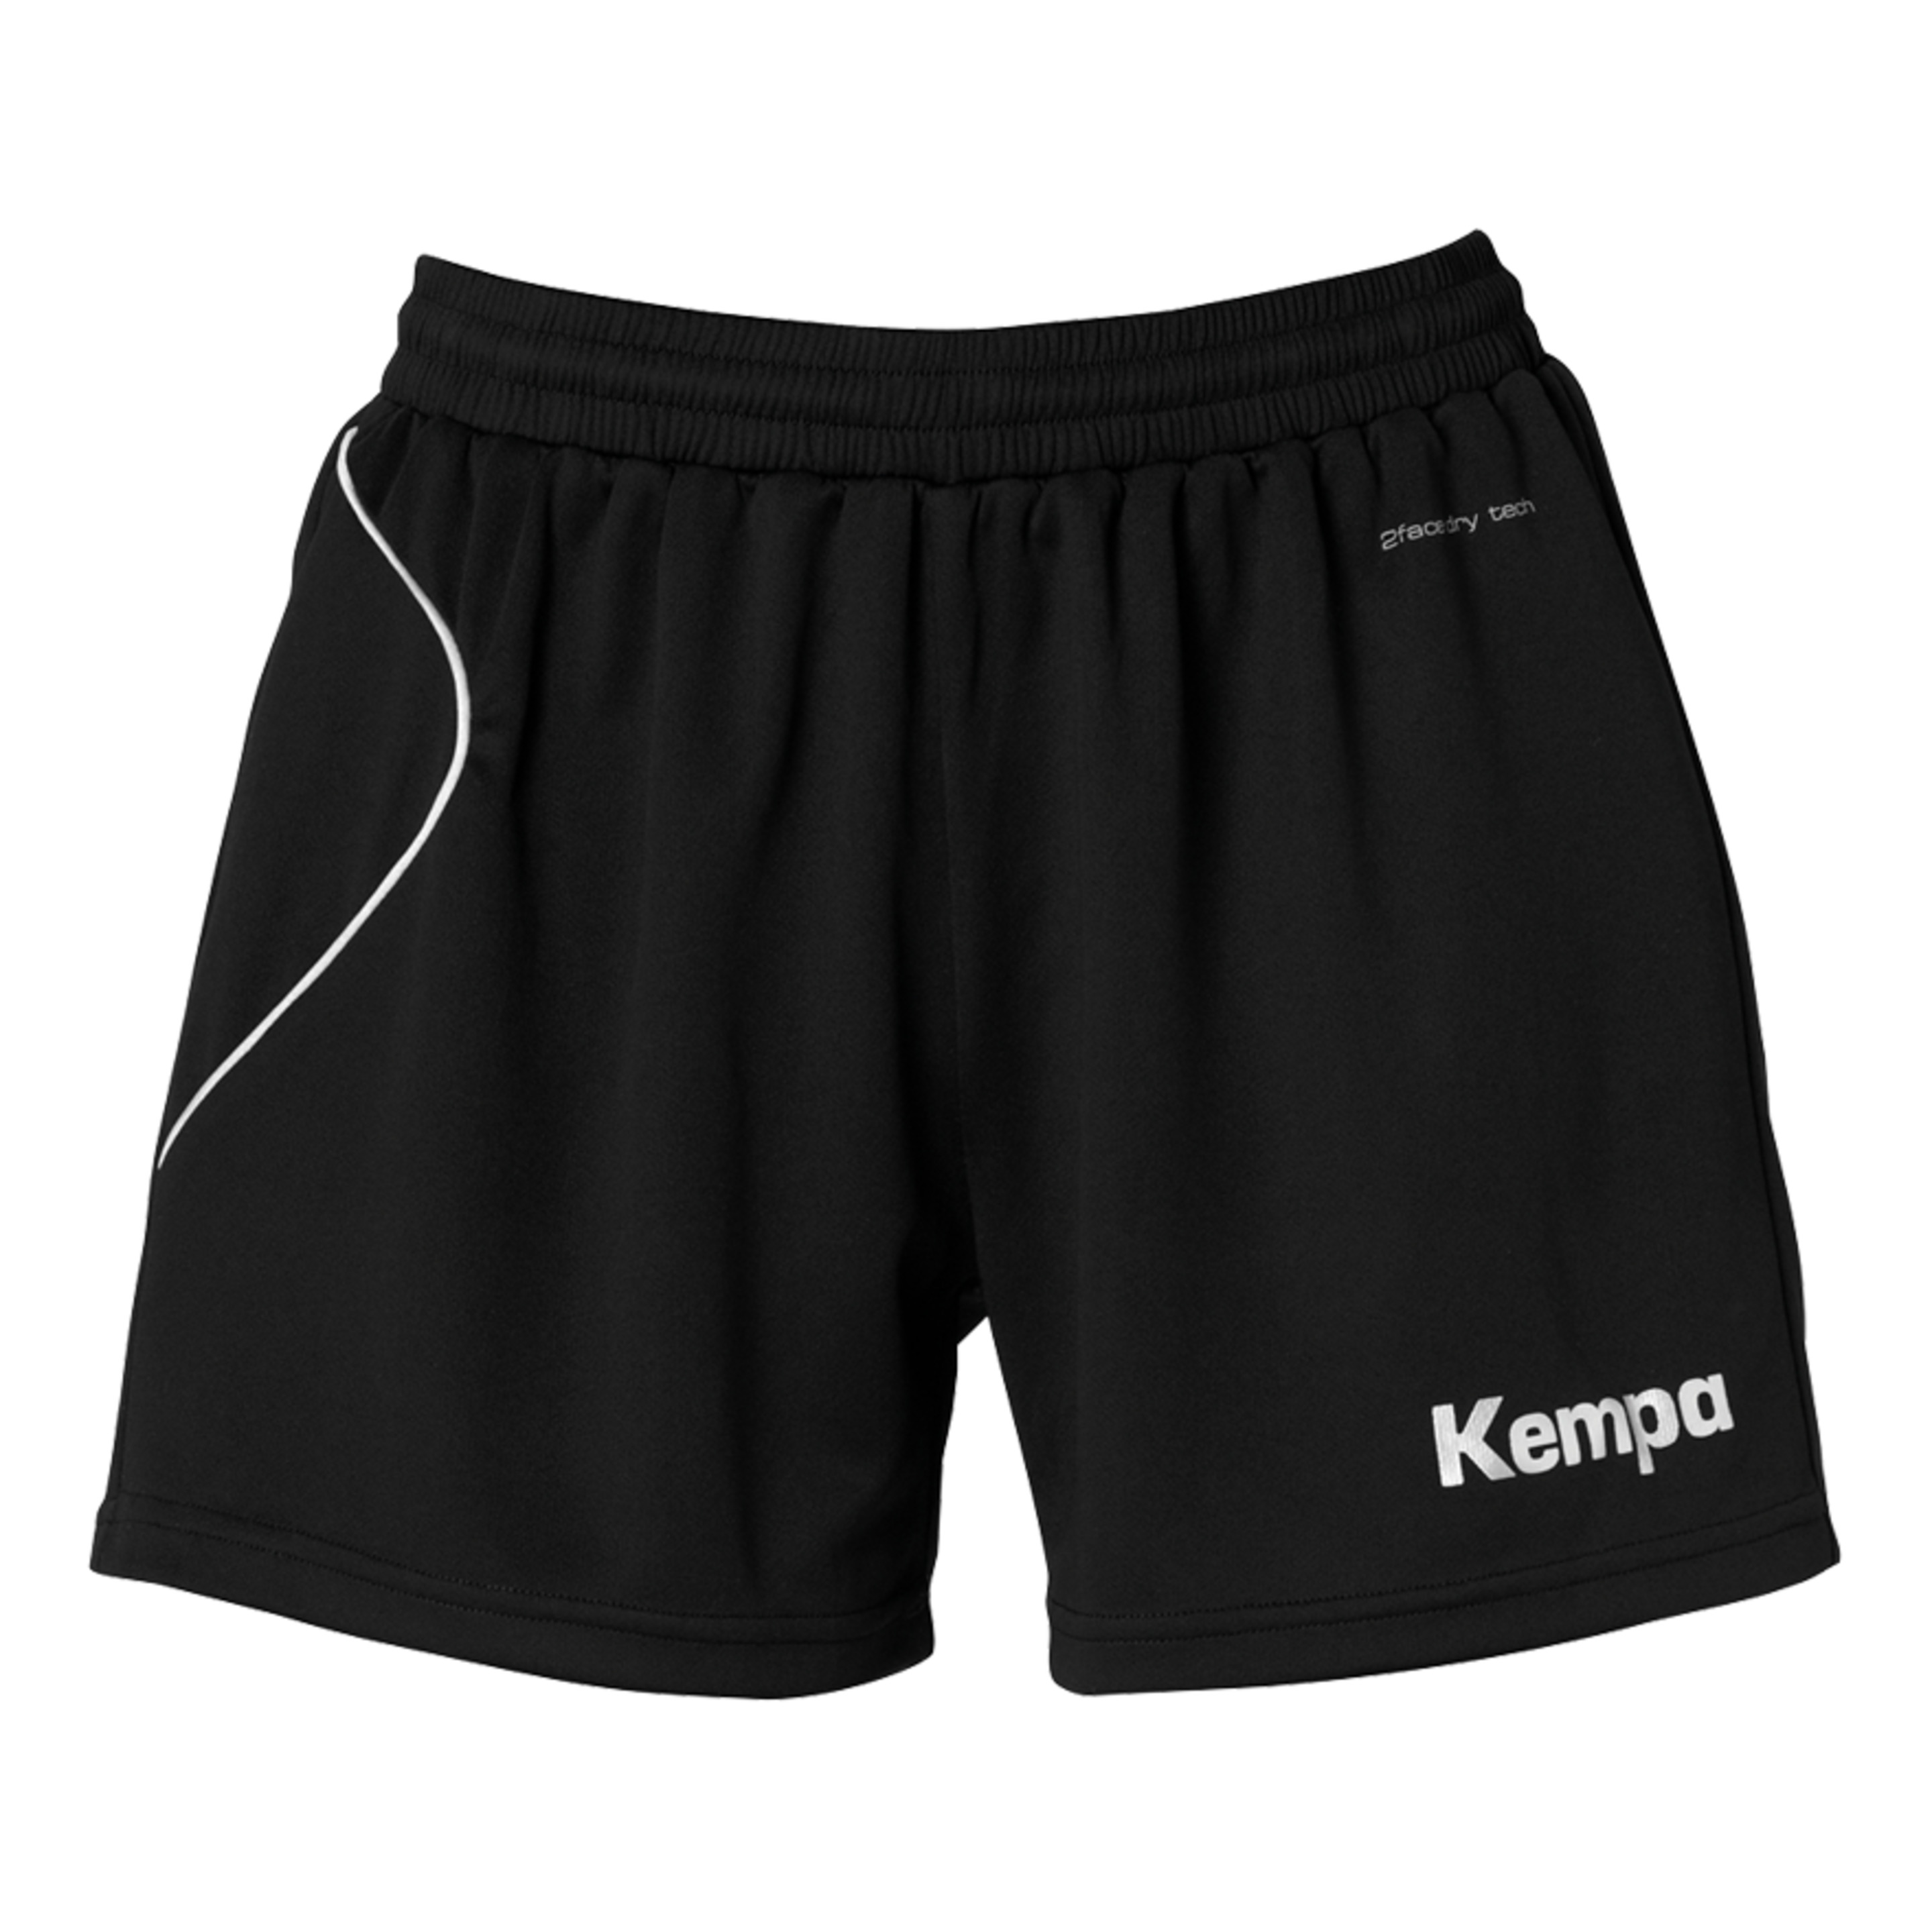 Curve Shorts De Mujer Negro/blanco Kempa - negro-blanco - 